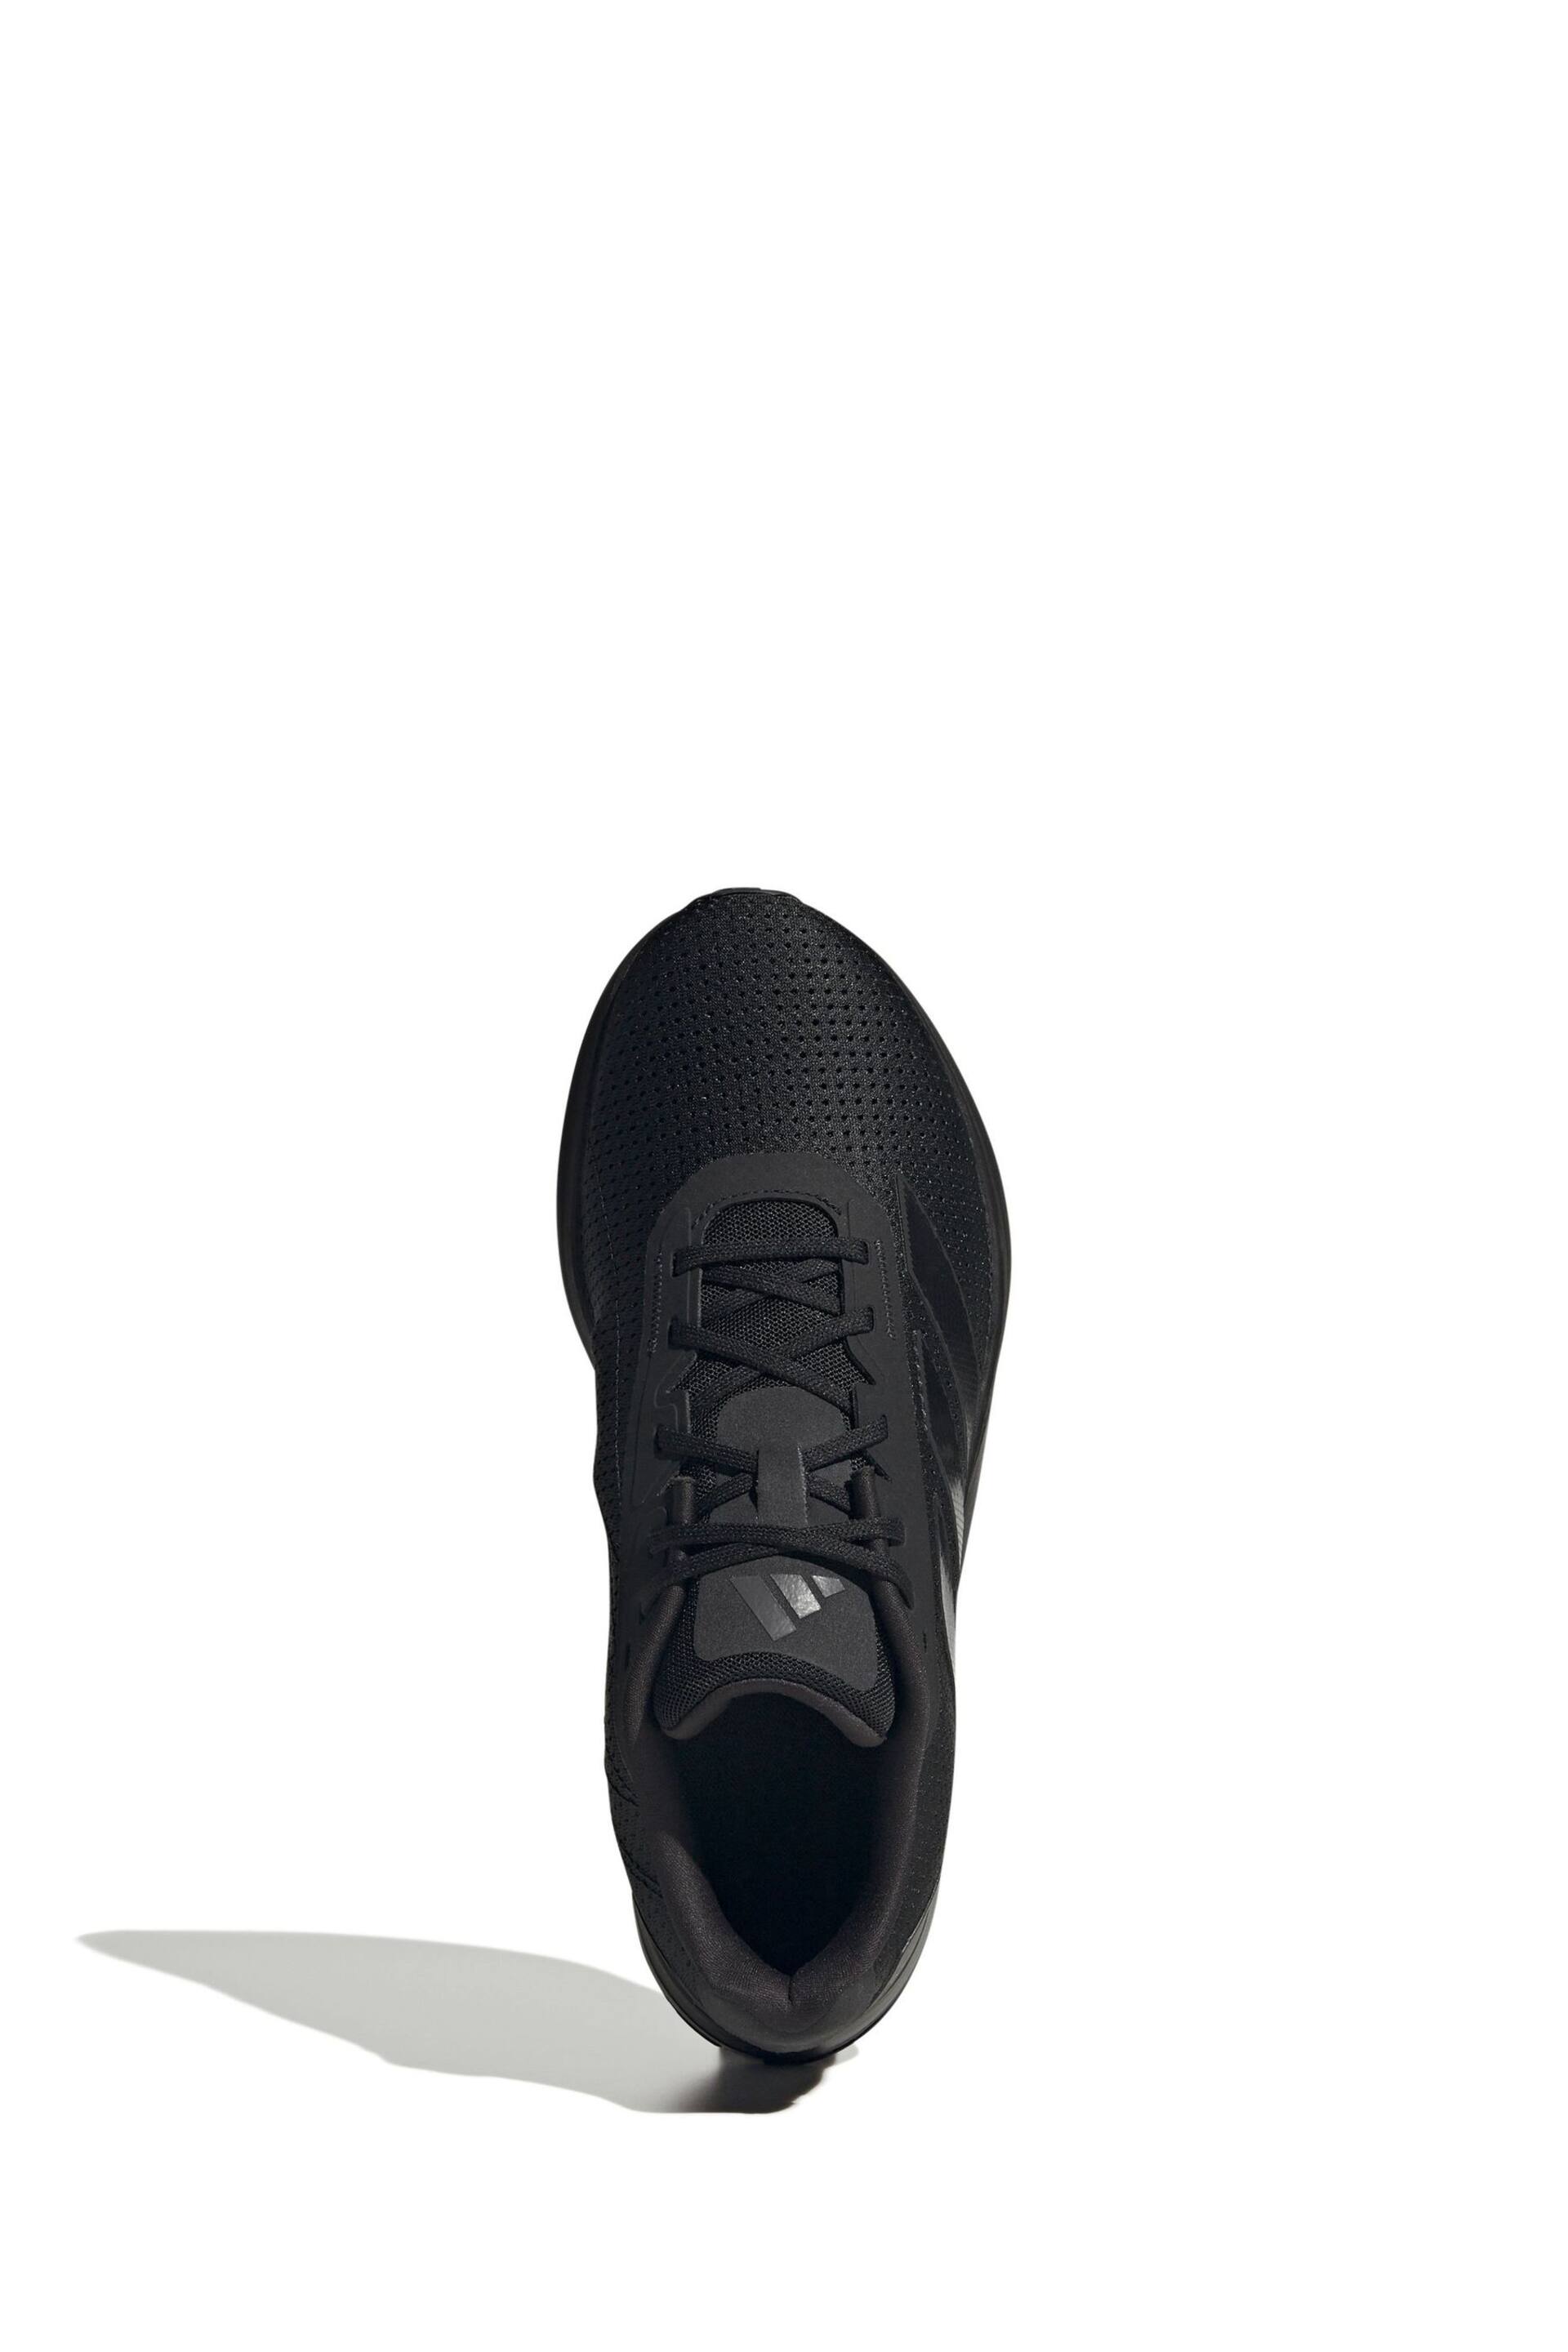 adidas Dark Black Duramo SL Trainers - Image 7 of 9